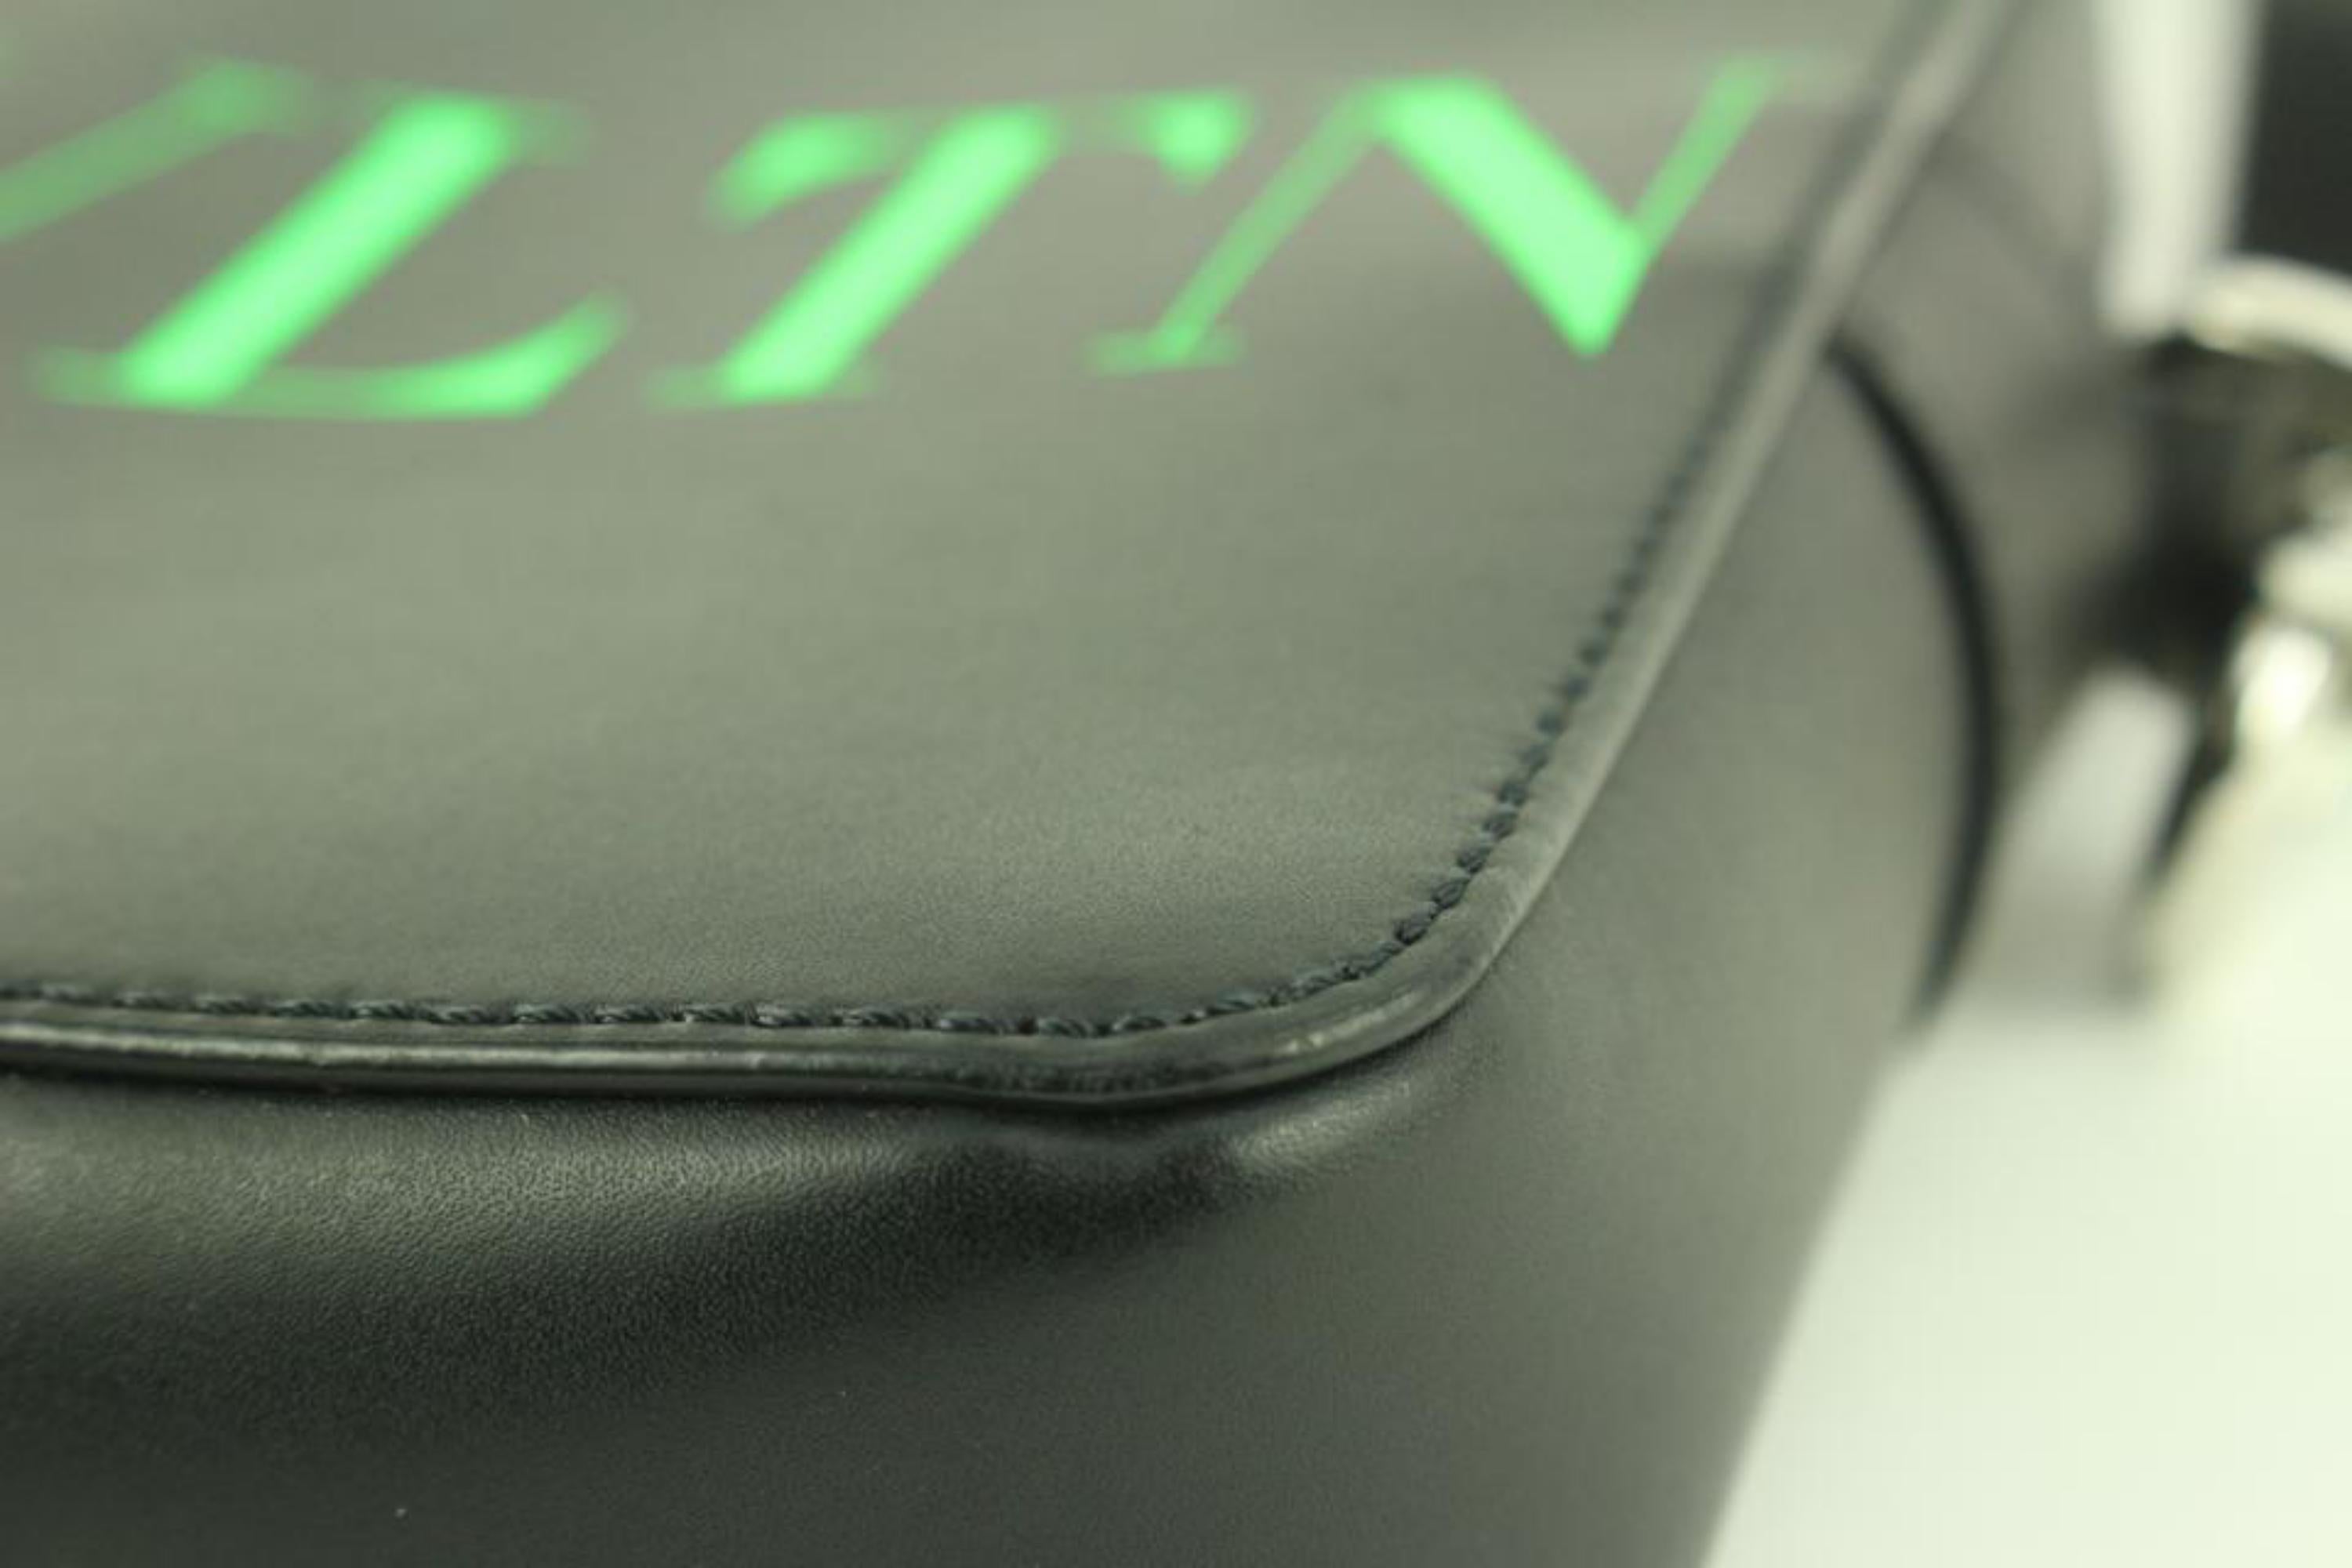 Valentino Black x Green Small Printed VLTN Crossbody Bag 112v34
Made In: Italy
Measurements: Length:  5